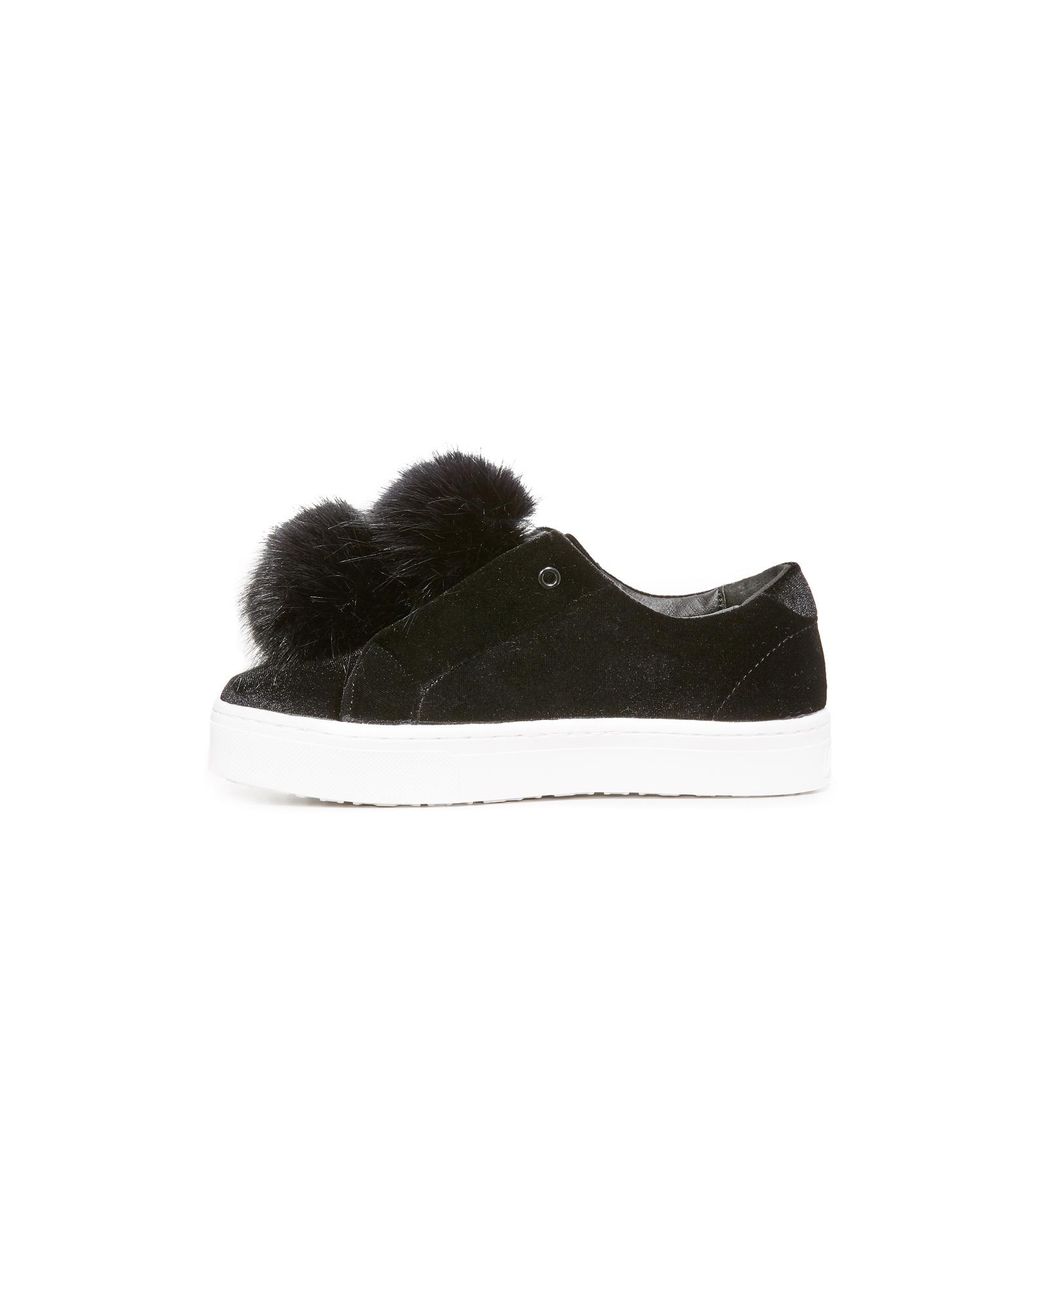 Sam Edelman Leya Velvet Pom Pom Sneakers in Black | Lyst